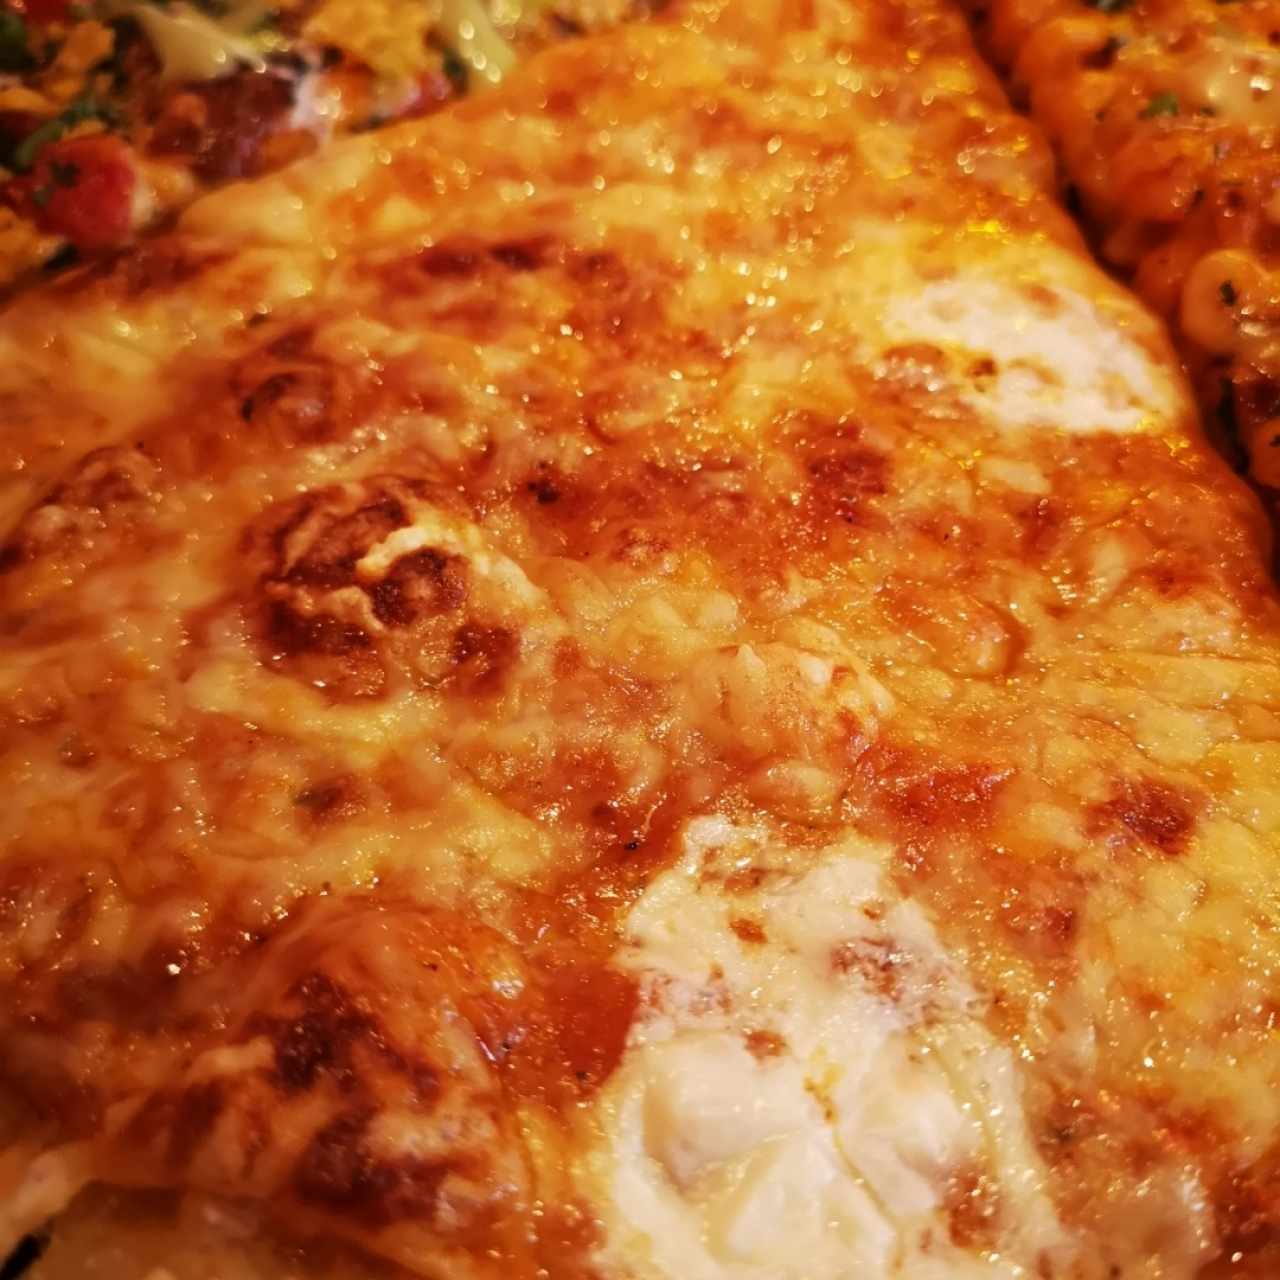 Pizzas - Slimers Favorite